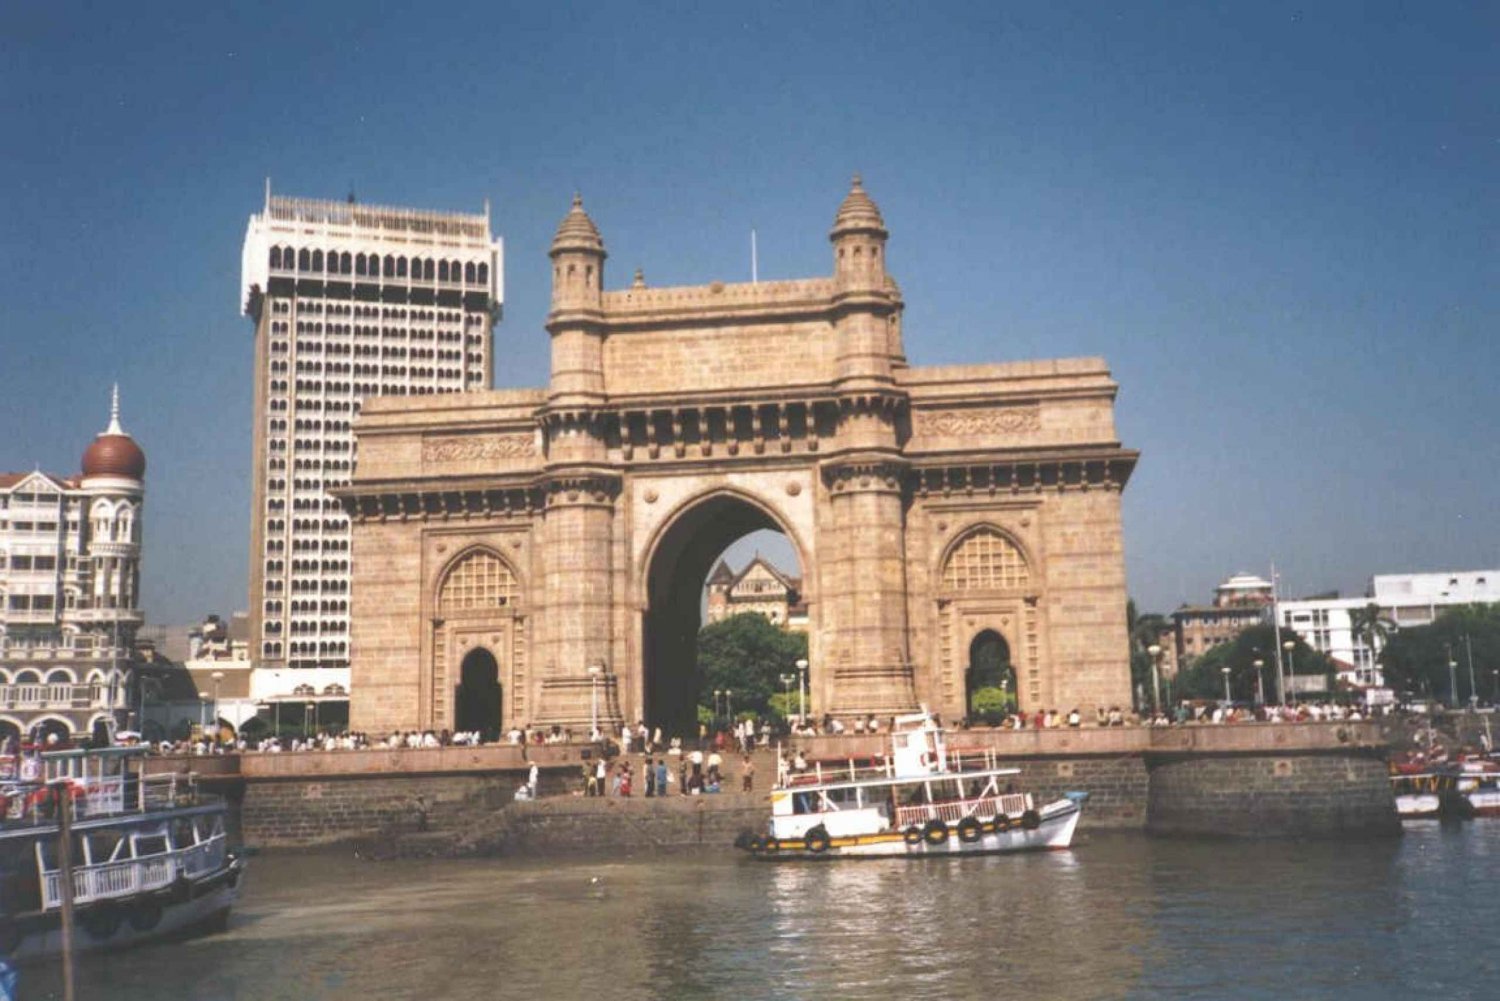 Mumbai/Bombay - Private Ganztagestour mit Sightseeing